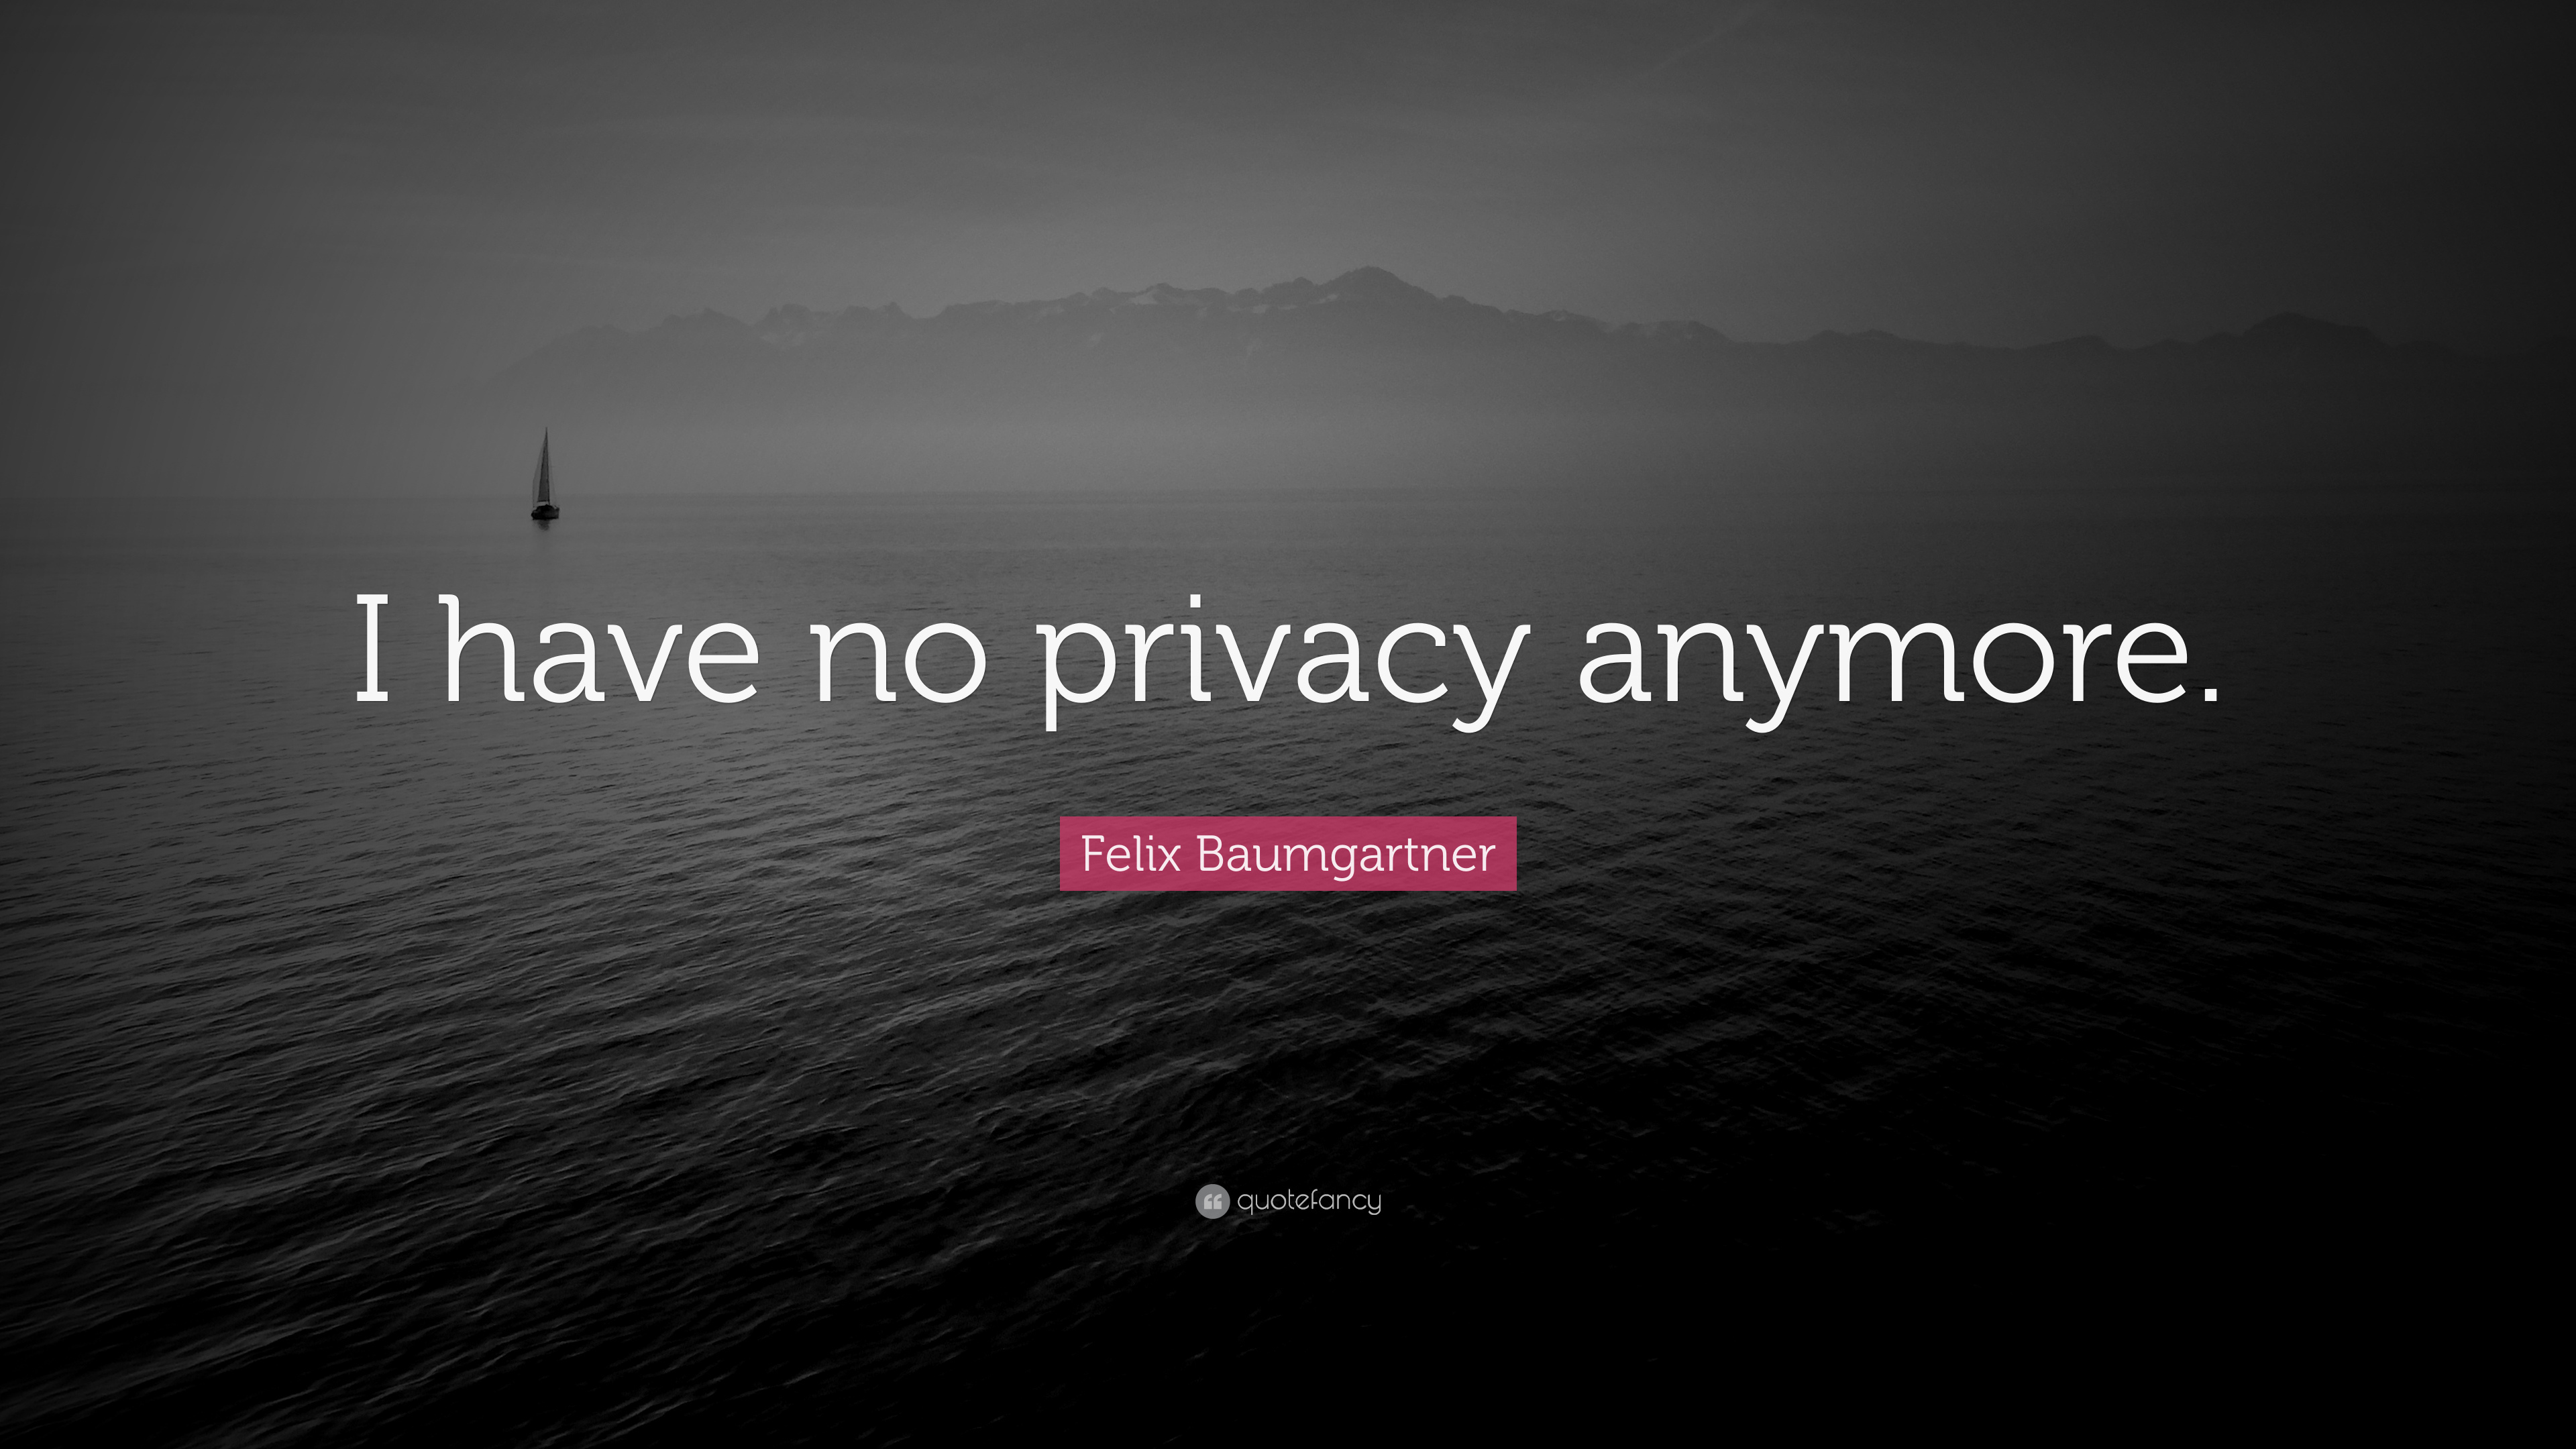 Felix baumgartner quote âi have no privacy anymoreâ